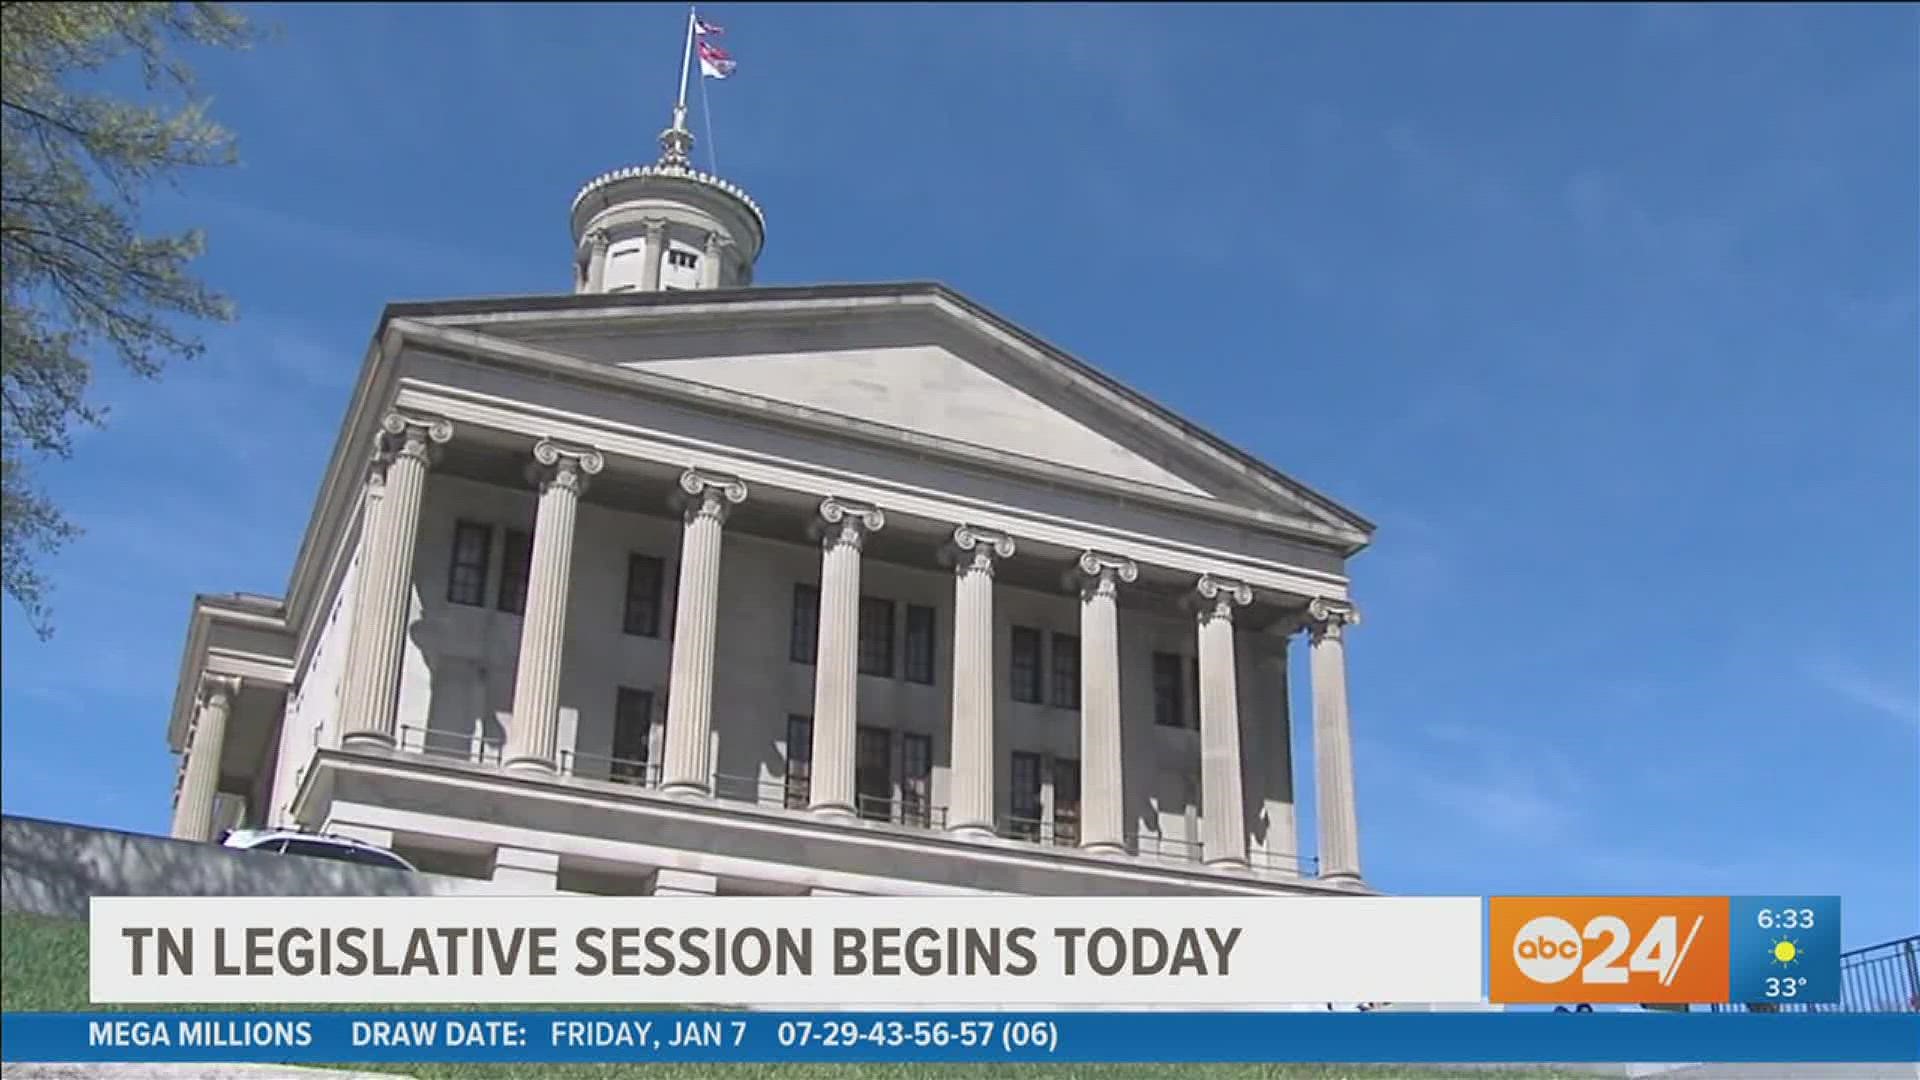 Memphis representatives share goals for legislative session